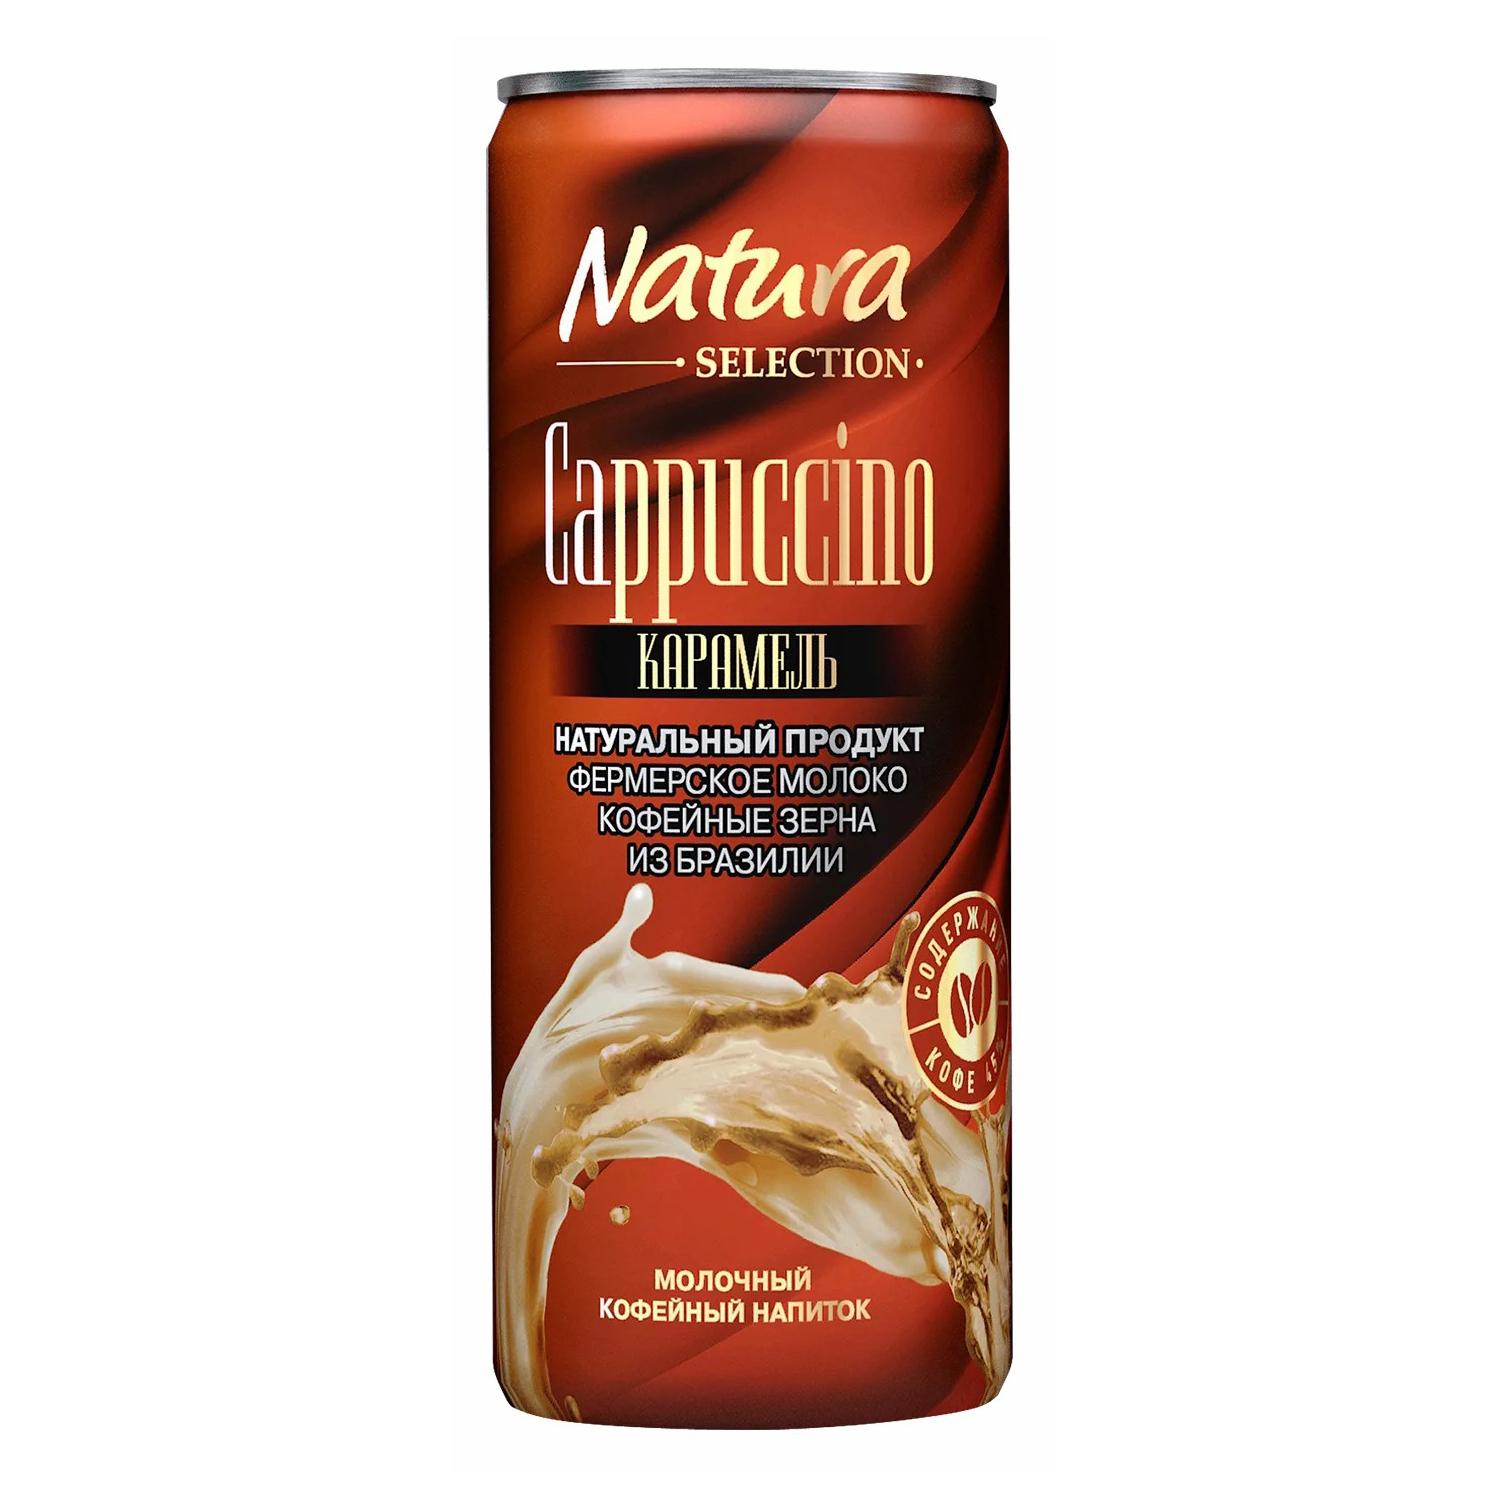 Напиток молочный кофейный Natura selection Cappuccino карамель 220 мл., ж/б